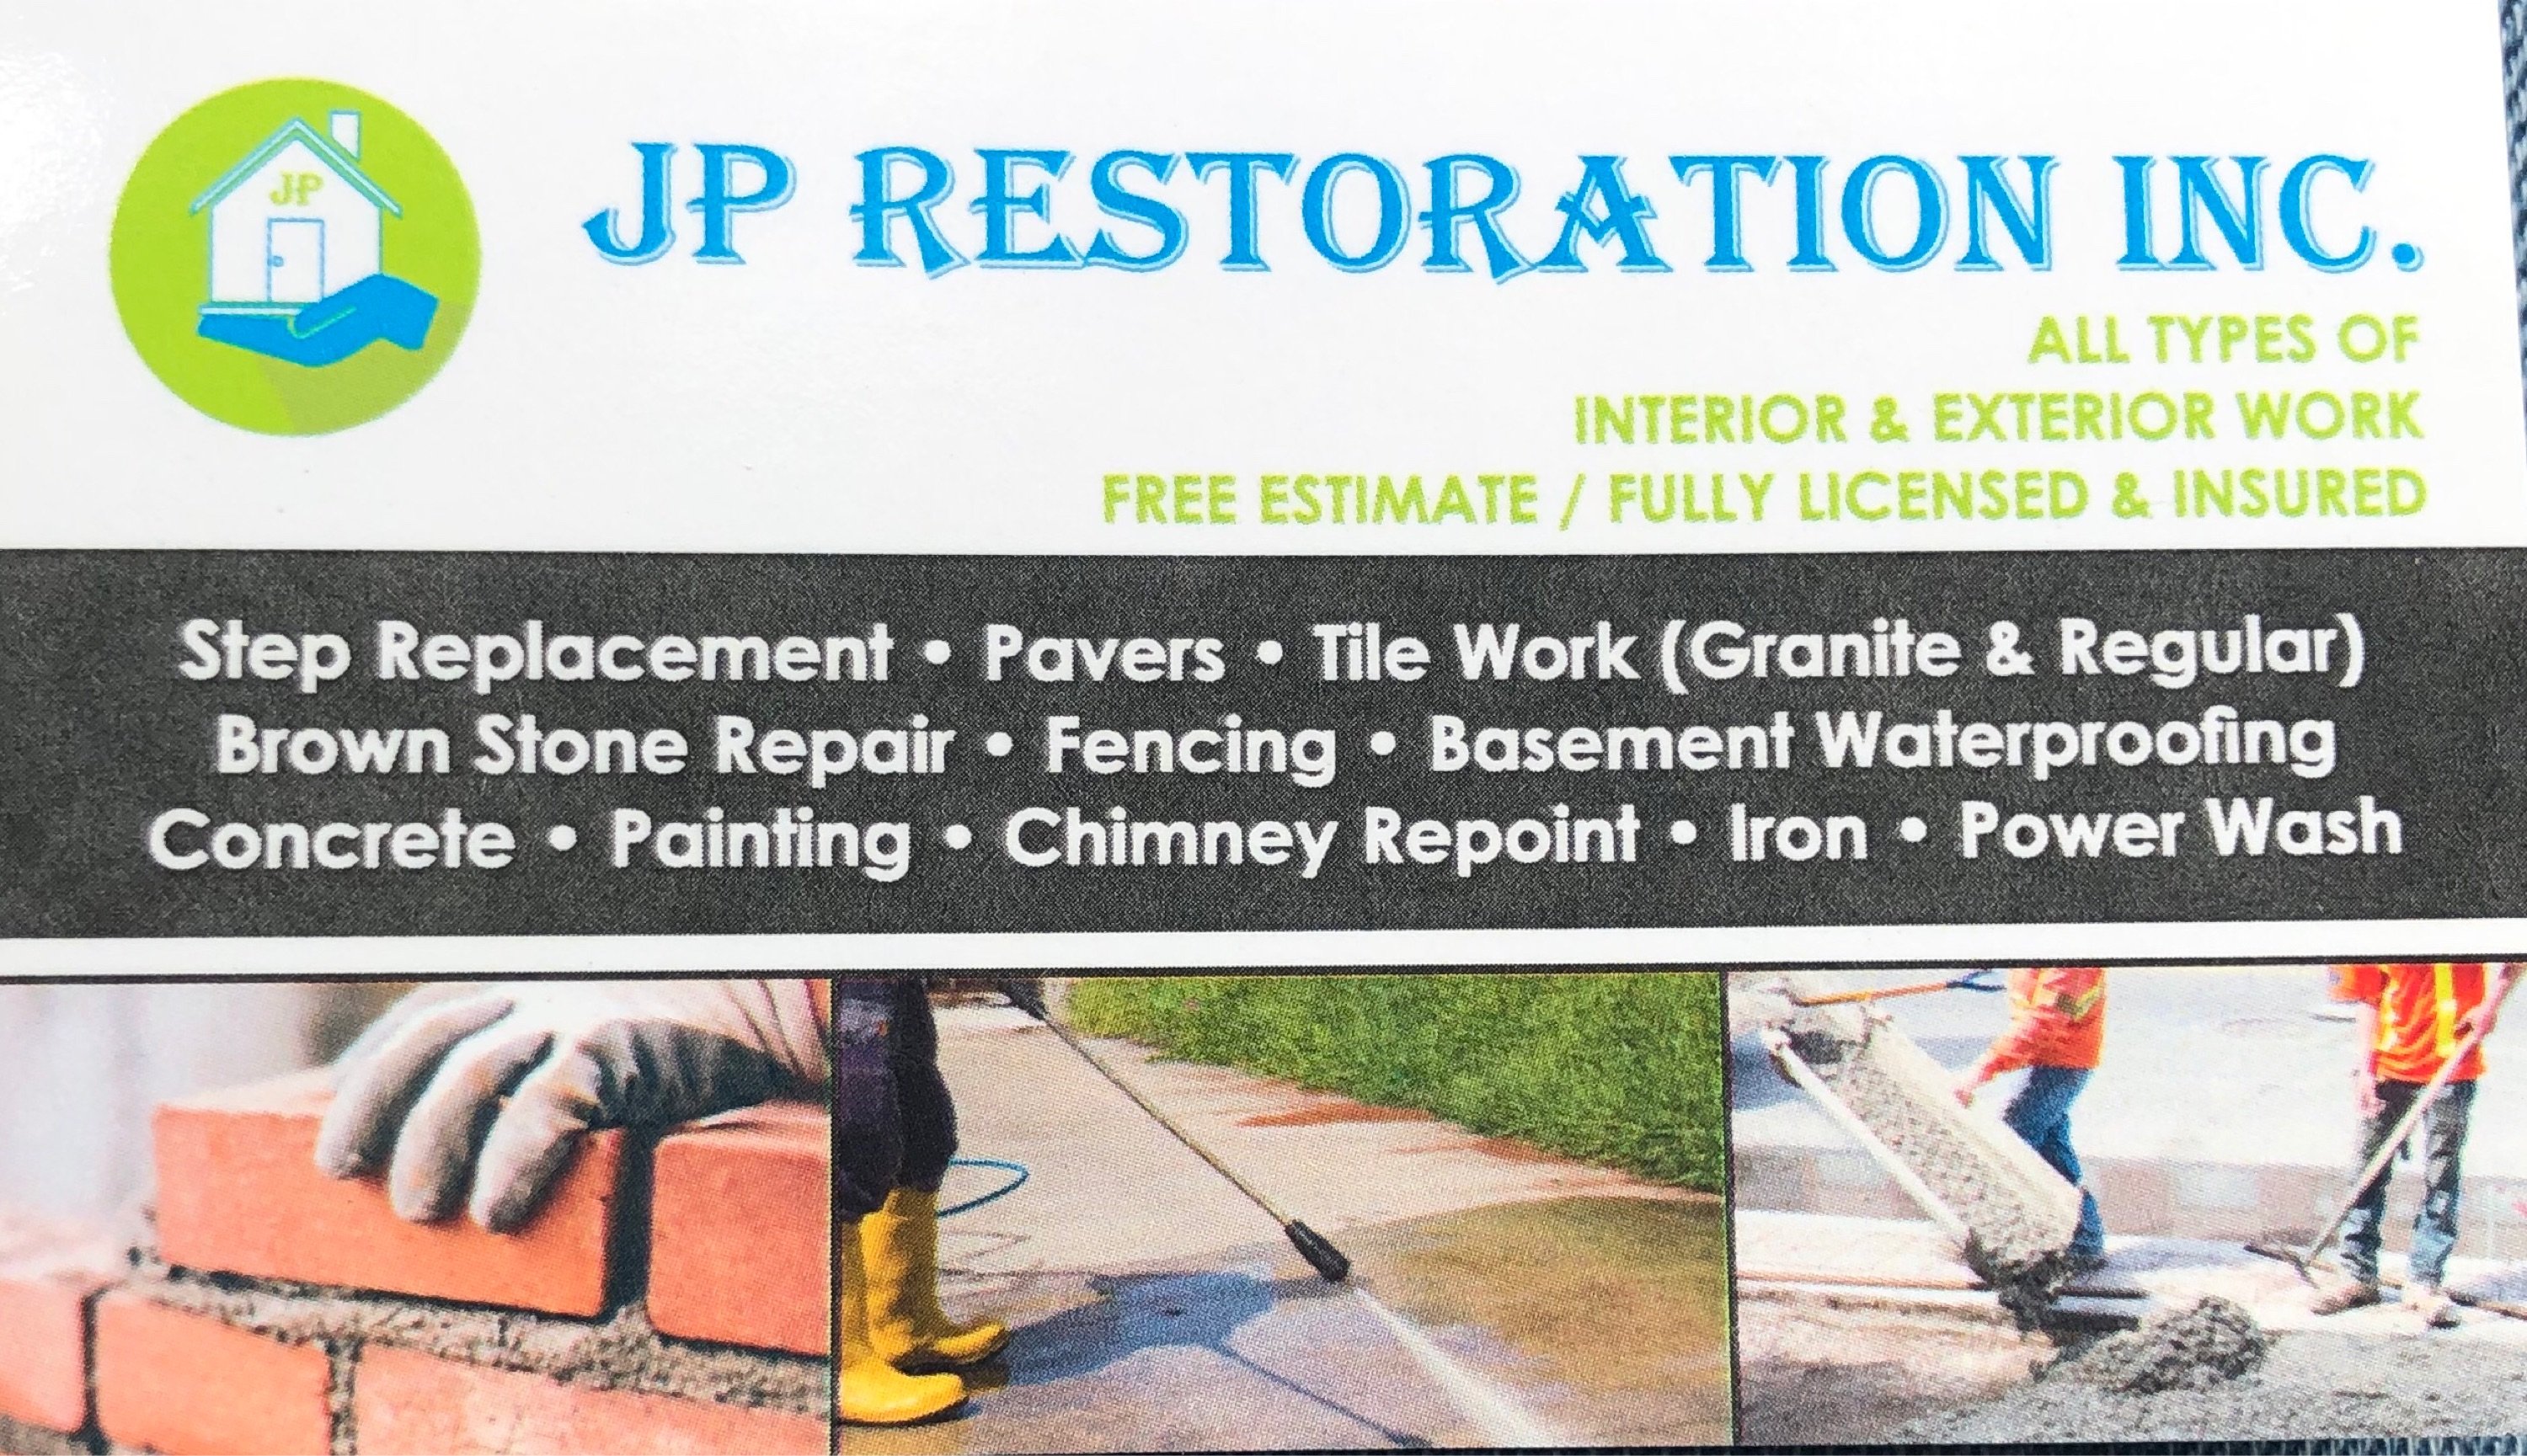 Jp restoration inc Logo